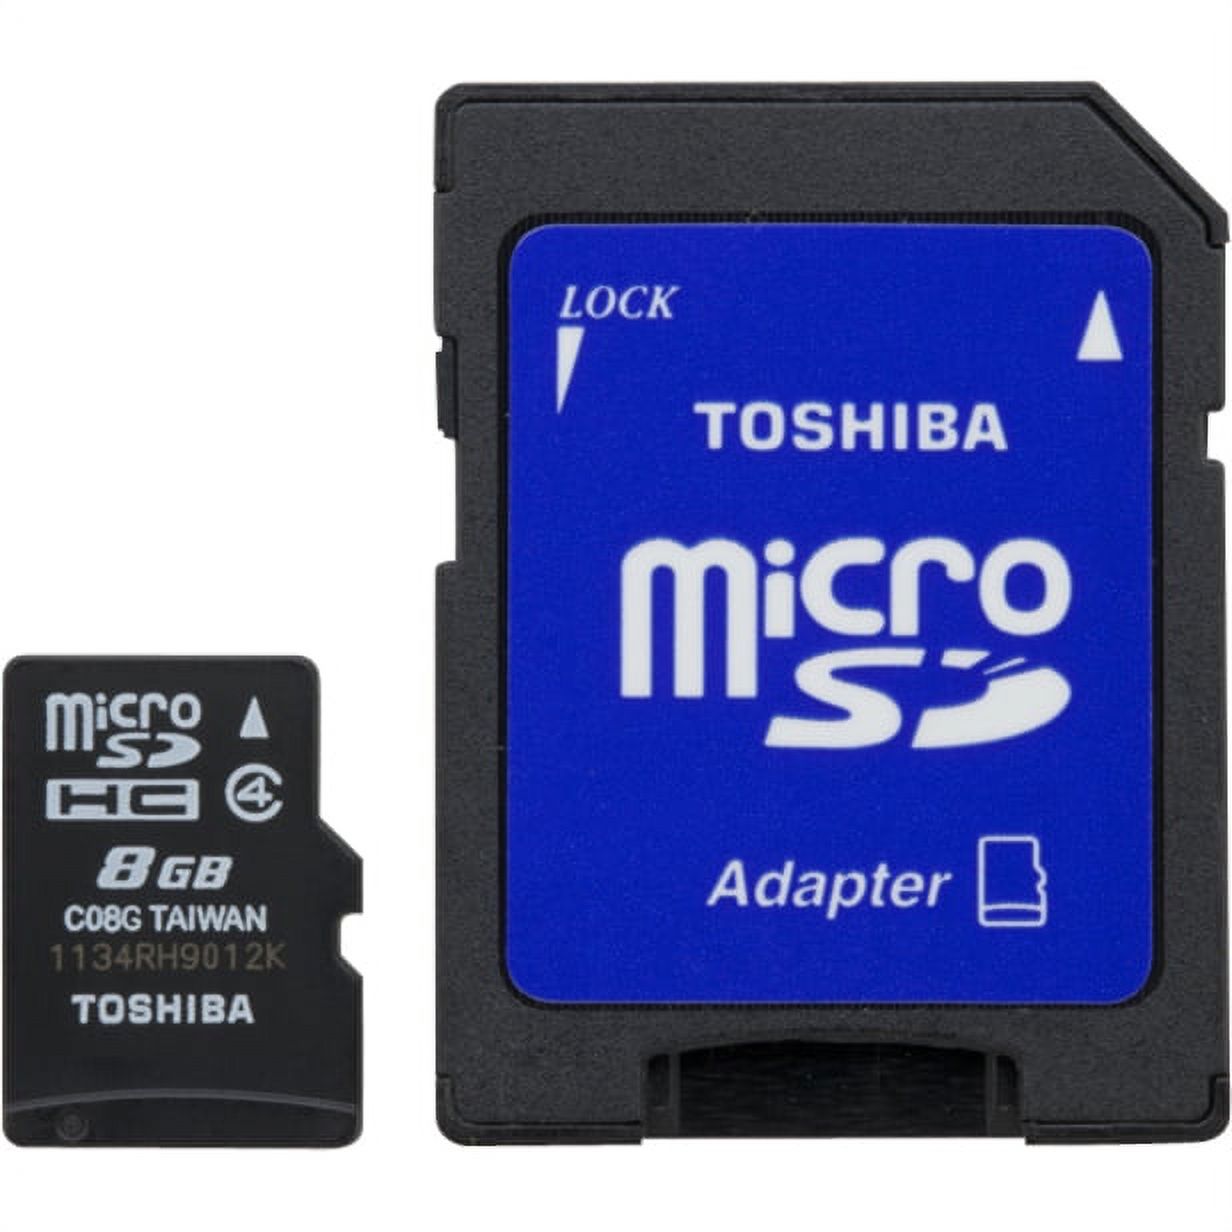 Toshiba 8 GB Class 4 microSDHC - image 1 of 2